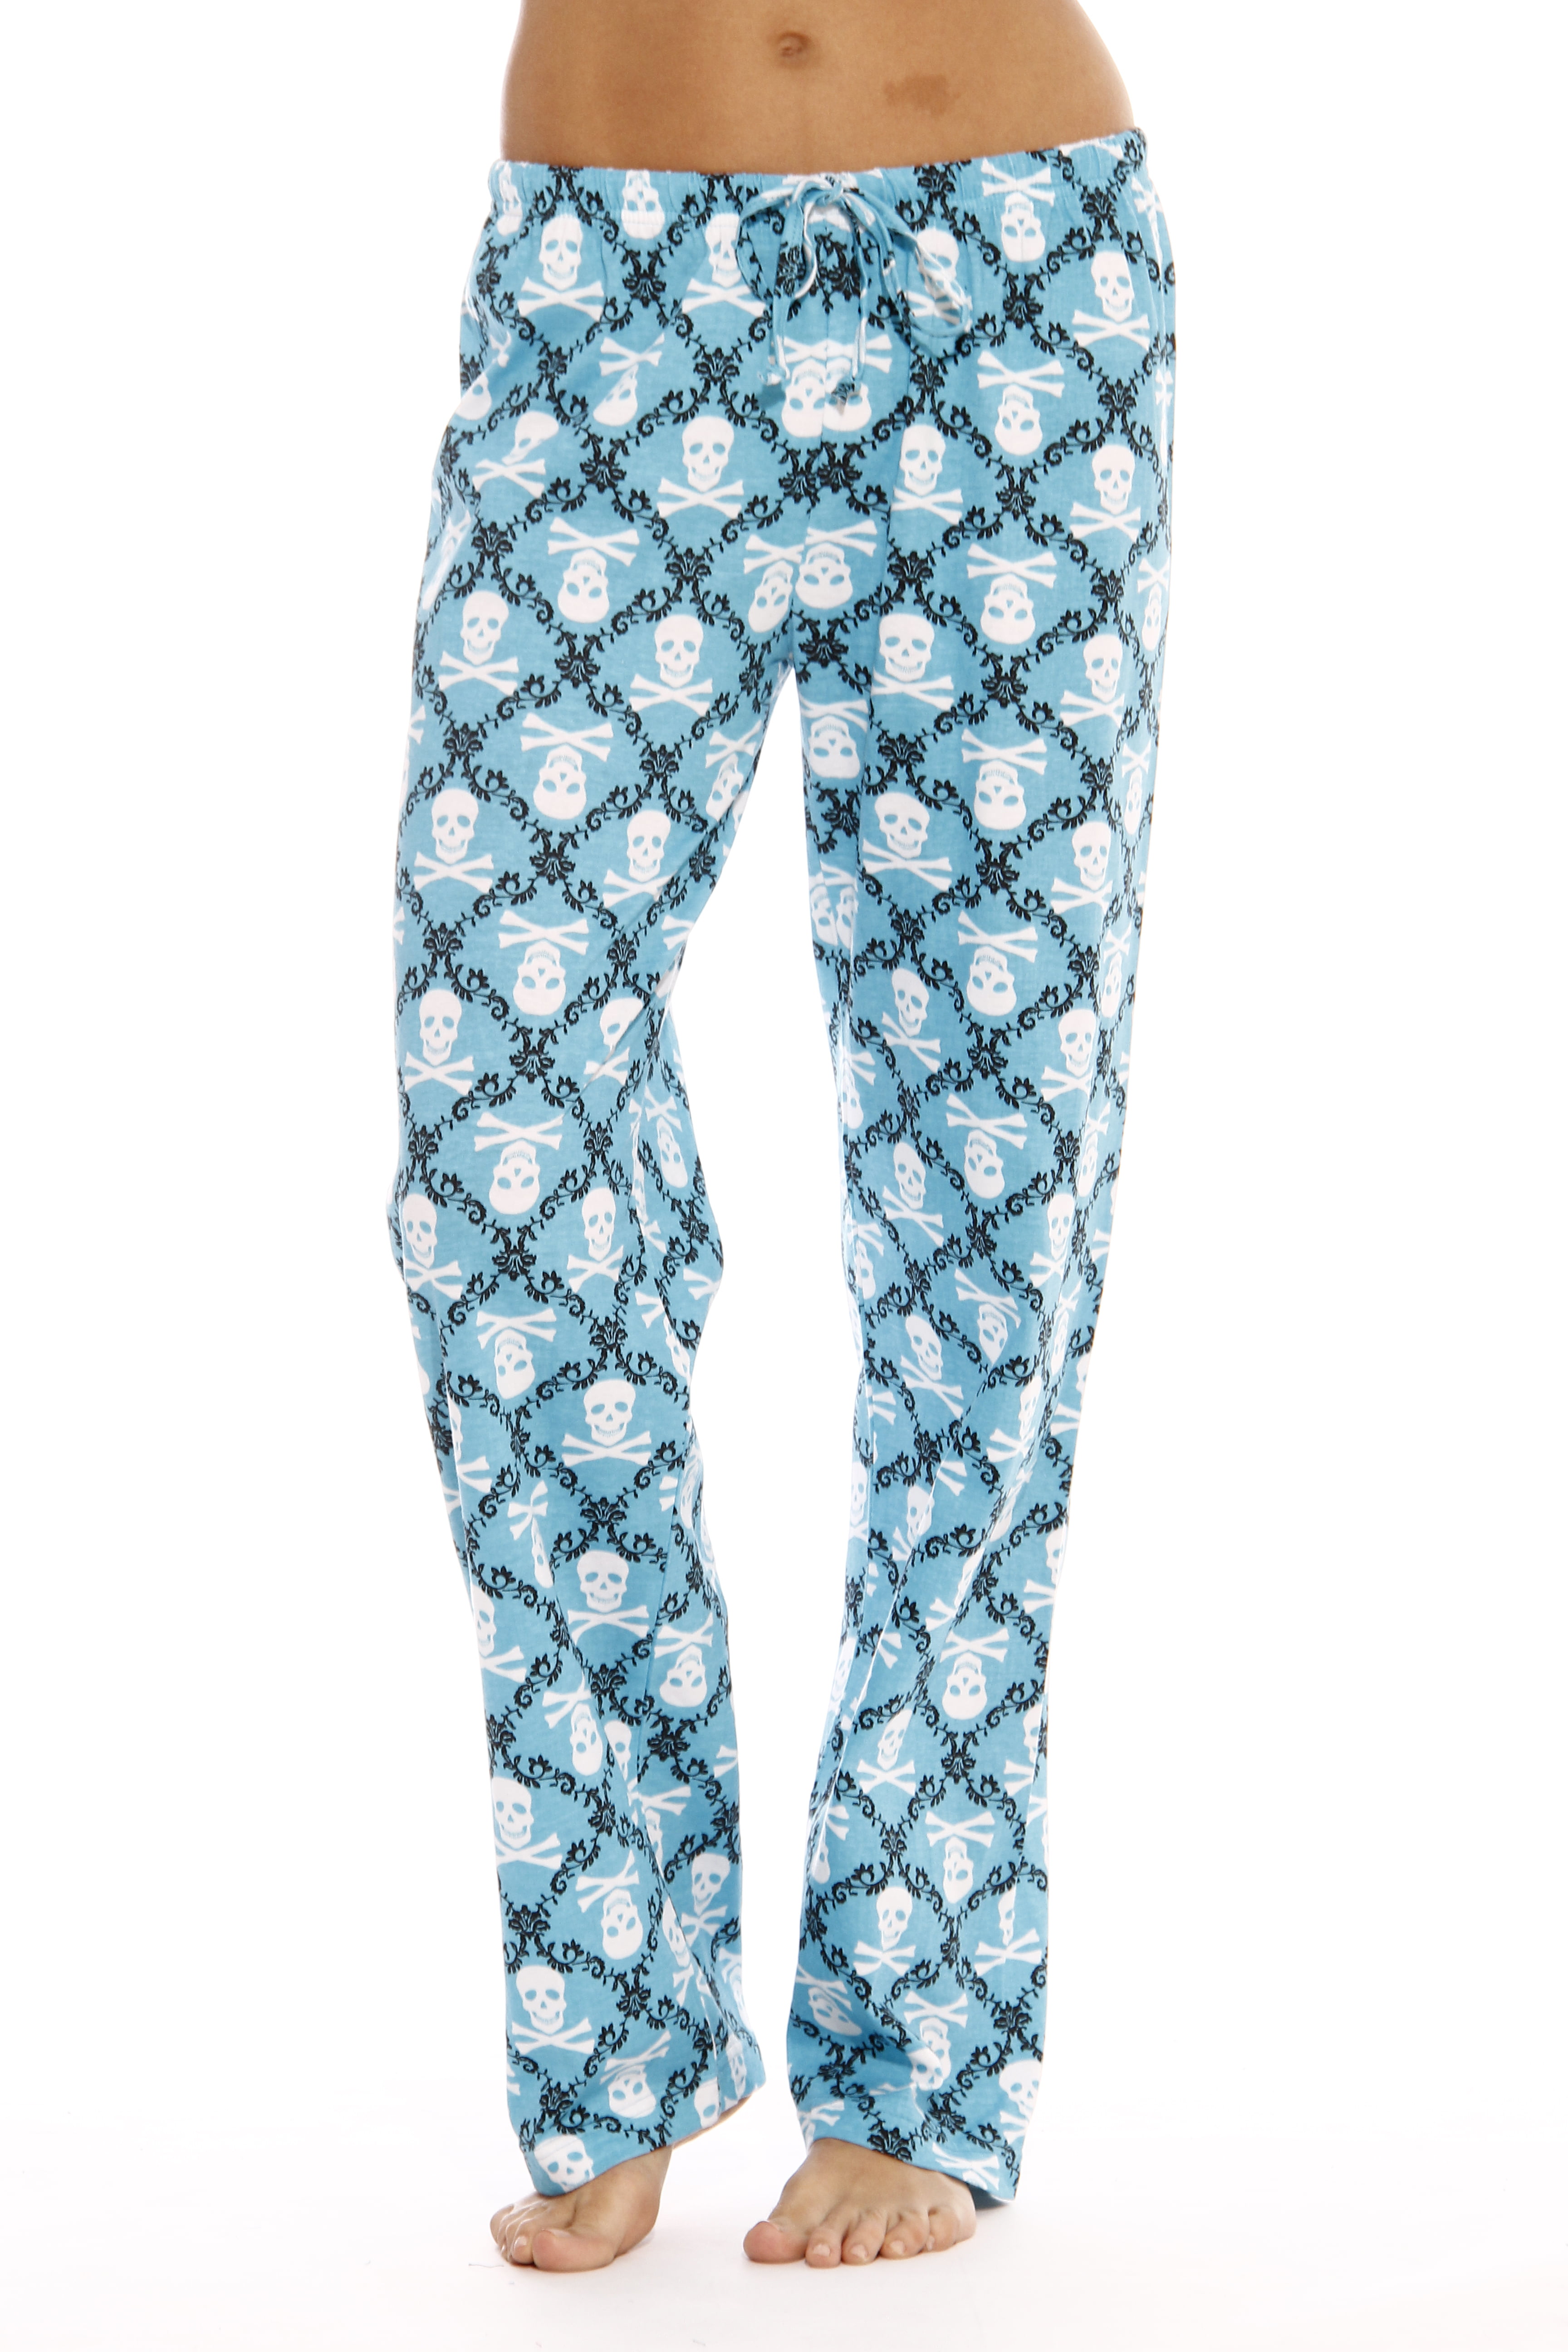 Just Love - Women Pajama Pants / Sleepwear (Skulls Blue, 3X) - Walmart ...